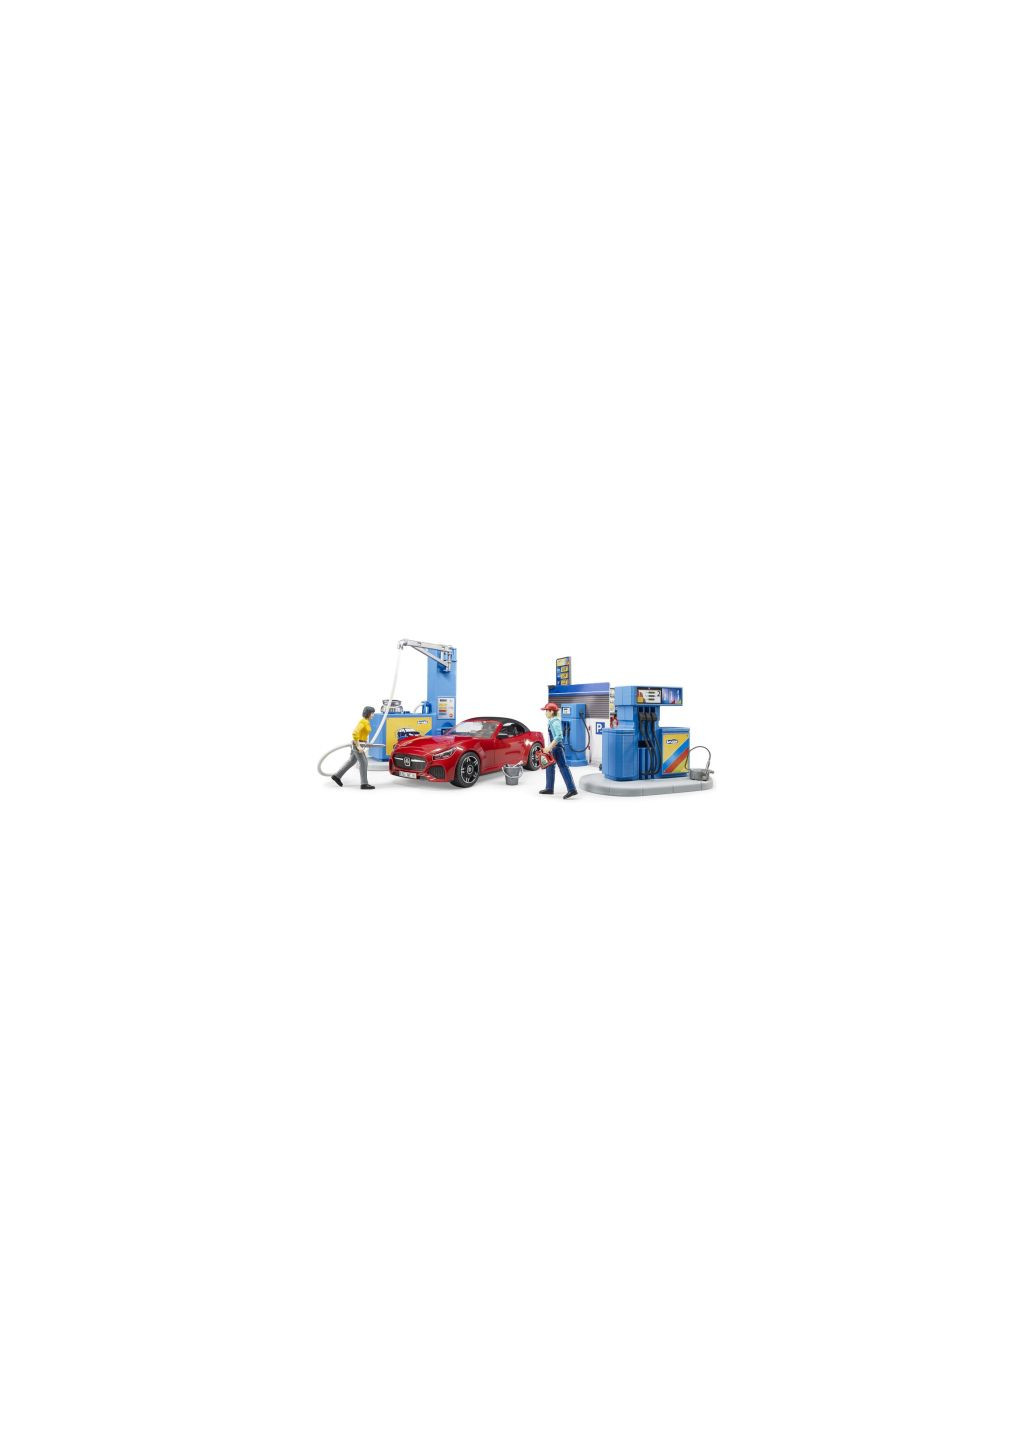 Игровой набор АЗС с автомойкой, автомобилем и фигурками (62111) Bruder азс з автомийкою, автомобілем та фігурками (275646504)